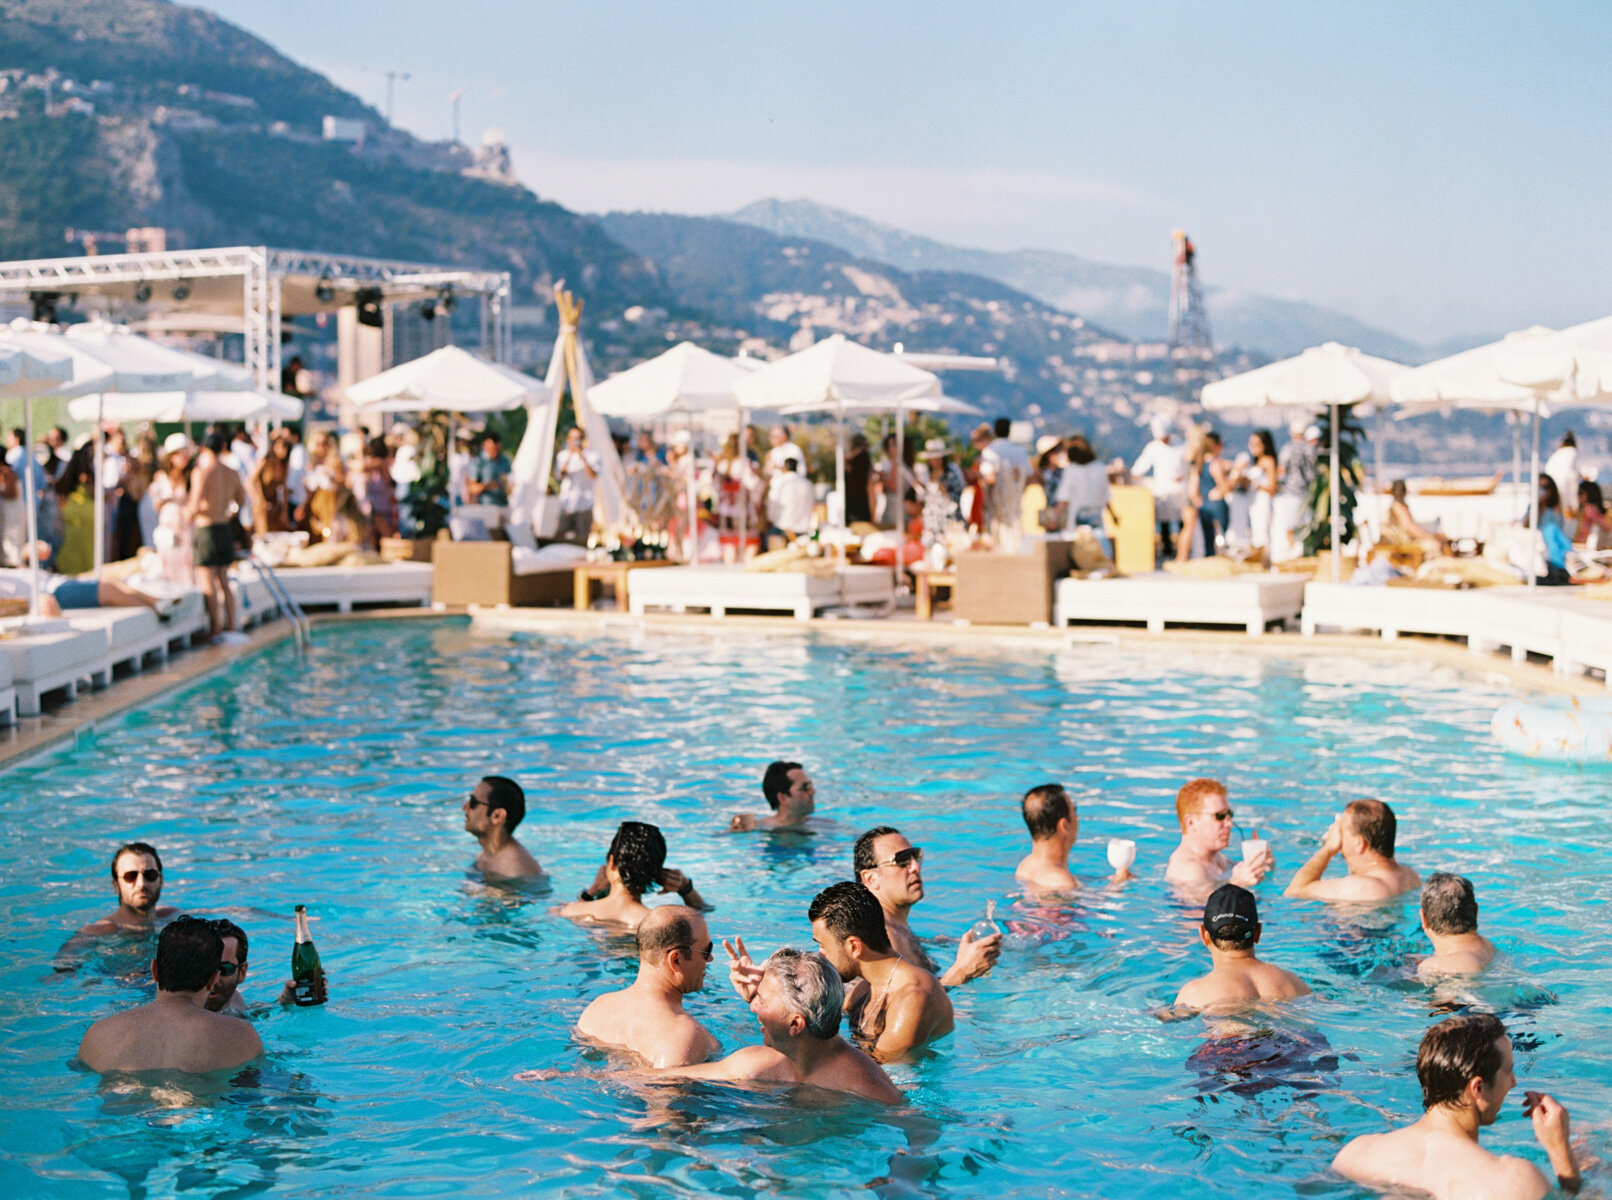 Nikki-Beach-Club-Pool-Monaco-Nice-Saint Tropez-Welcome-Dinner-Katie-Grant-destination-wedding (20 of 22).jpg